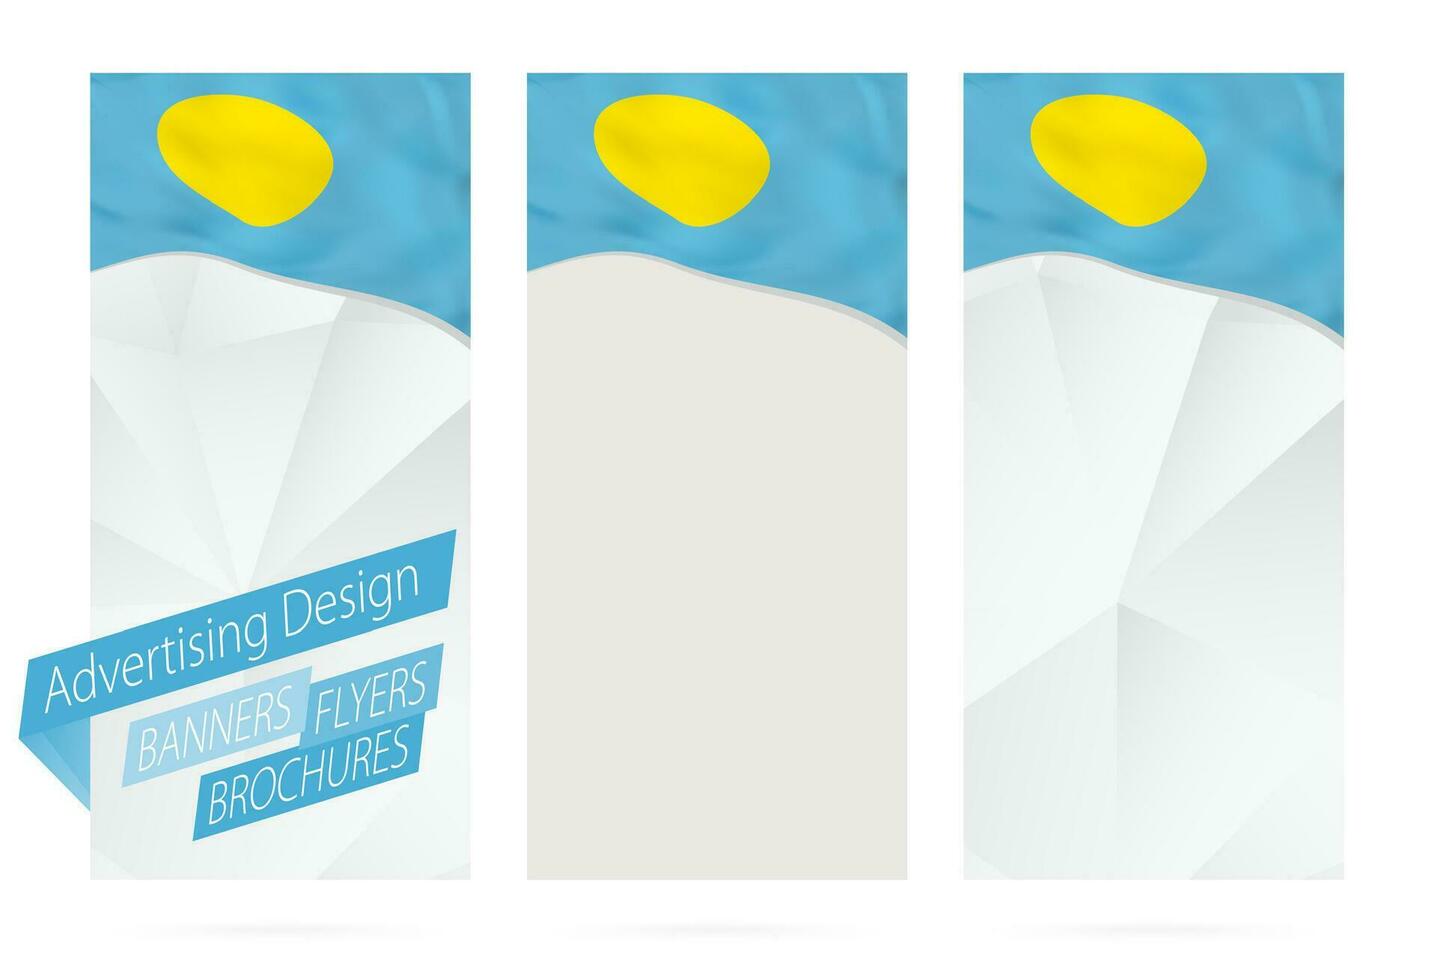 ontwerp van spandoeken, flyers, brochures met vlag van paleis. vector